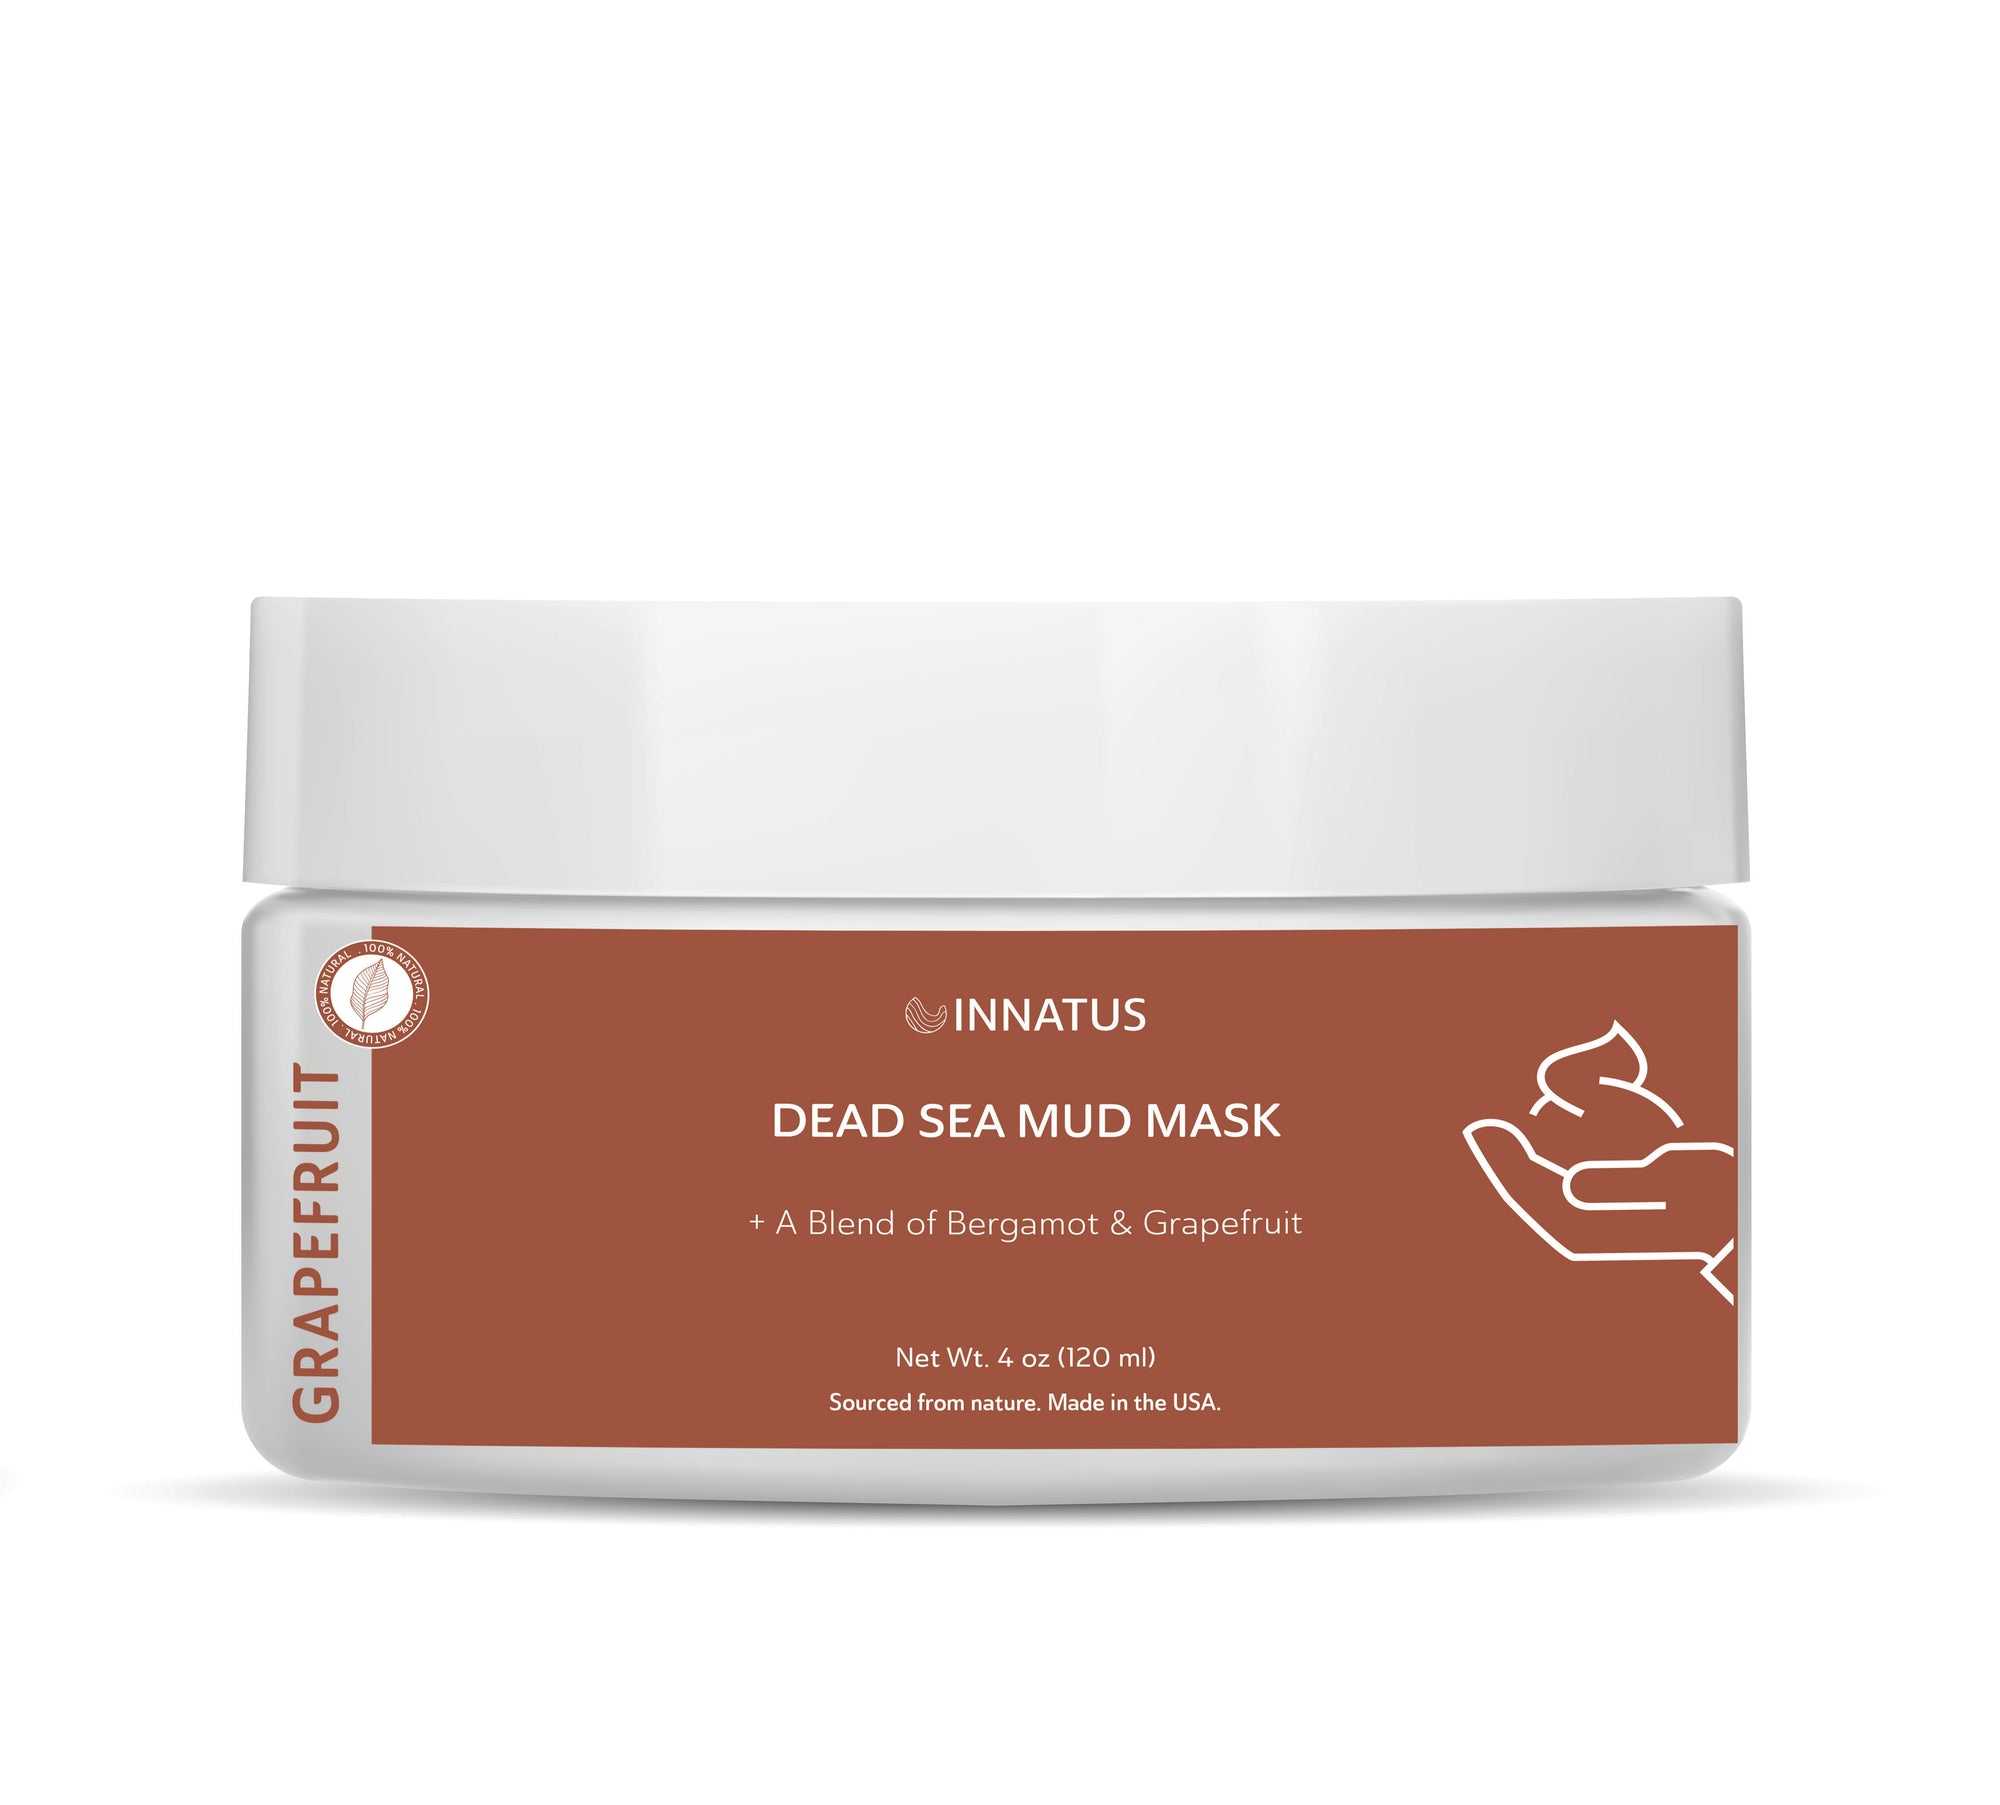 Dead Sea Mud Mask with Grapefruit Oil Blend